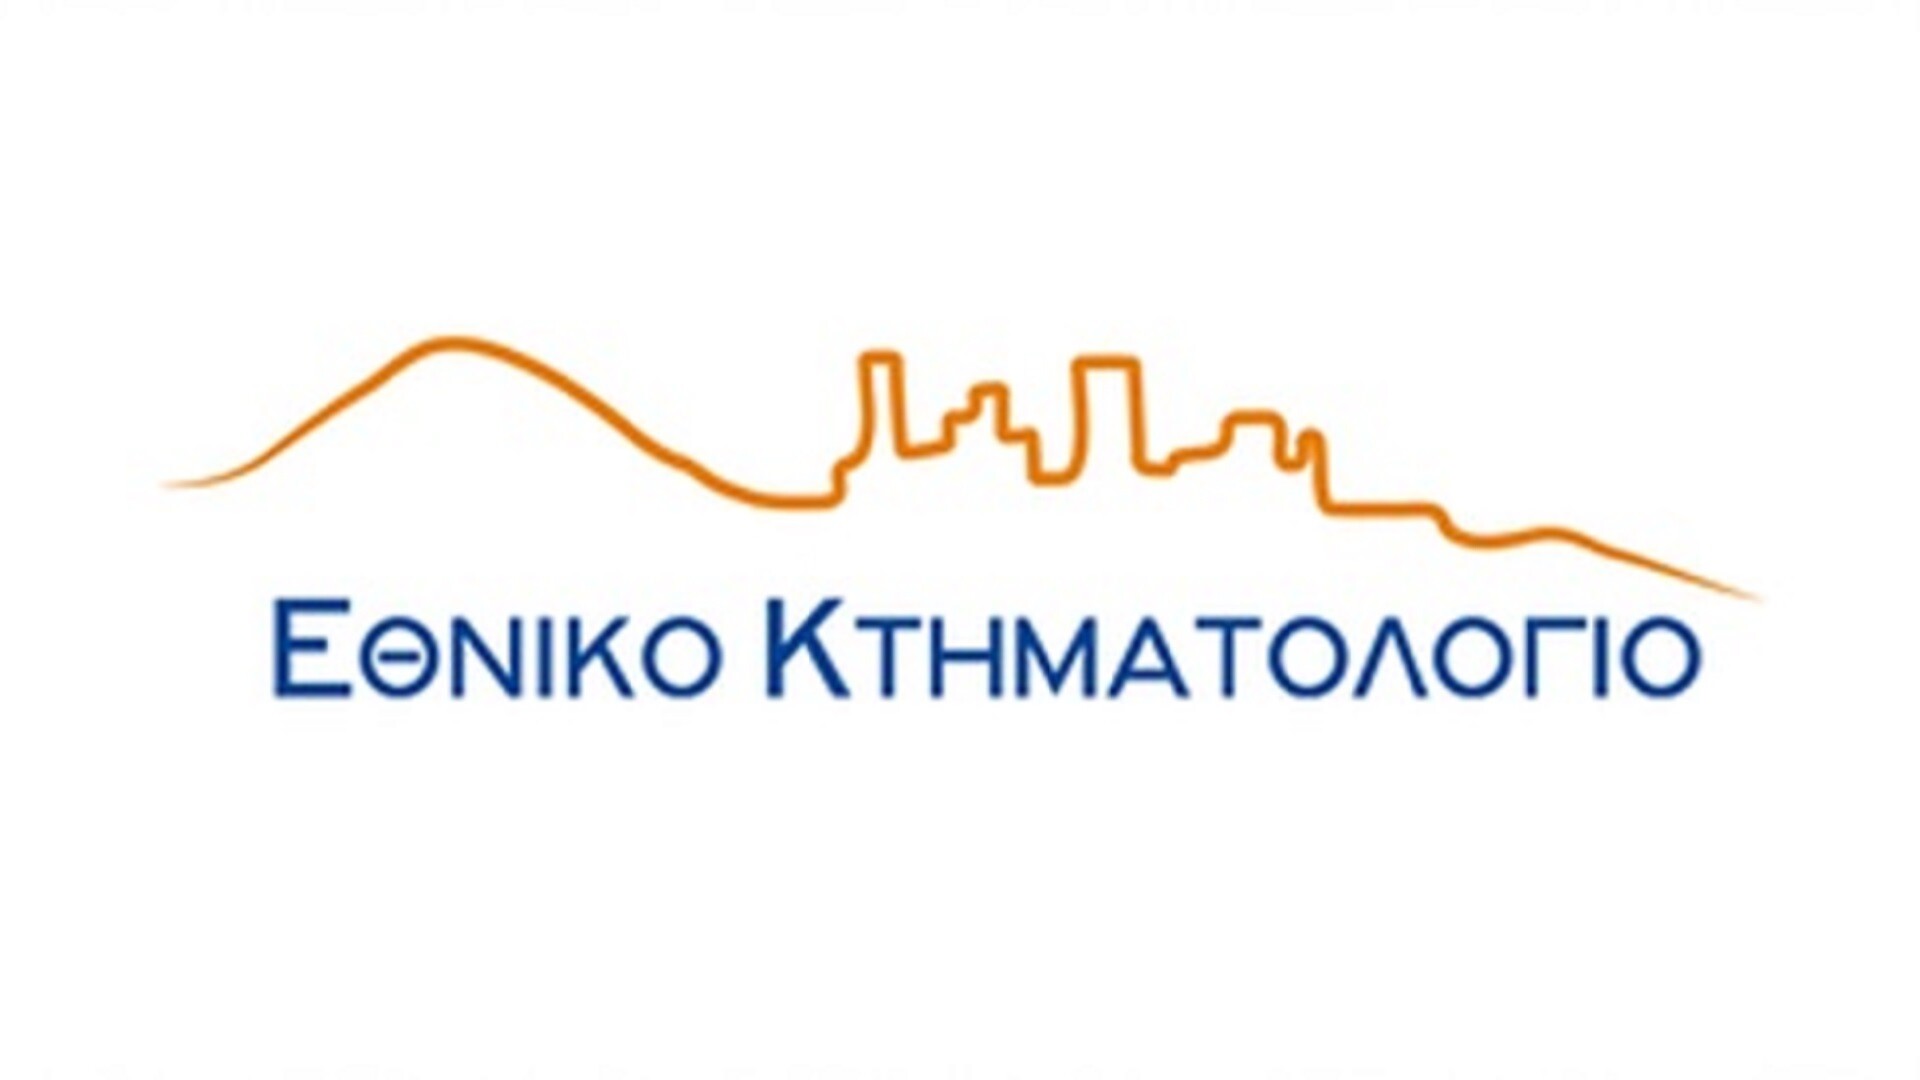 More information about "Ξεκίνησε η δημοσιοποίηση των εκθέσεων του Γραφείου Κτηματογράφησης Αθηνών για τις αιτήσεις διόρθωσης που υποβλήθηκαν - Προθεσμία ενημέρωσης των θιγόμενων έως 27 Απριλίου 2022"